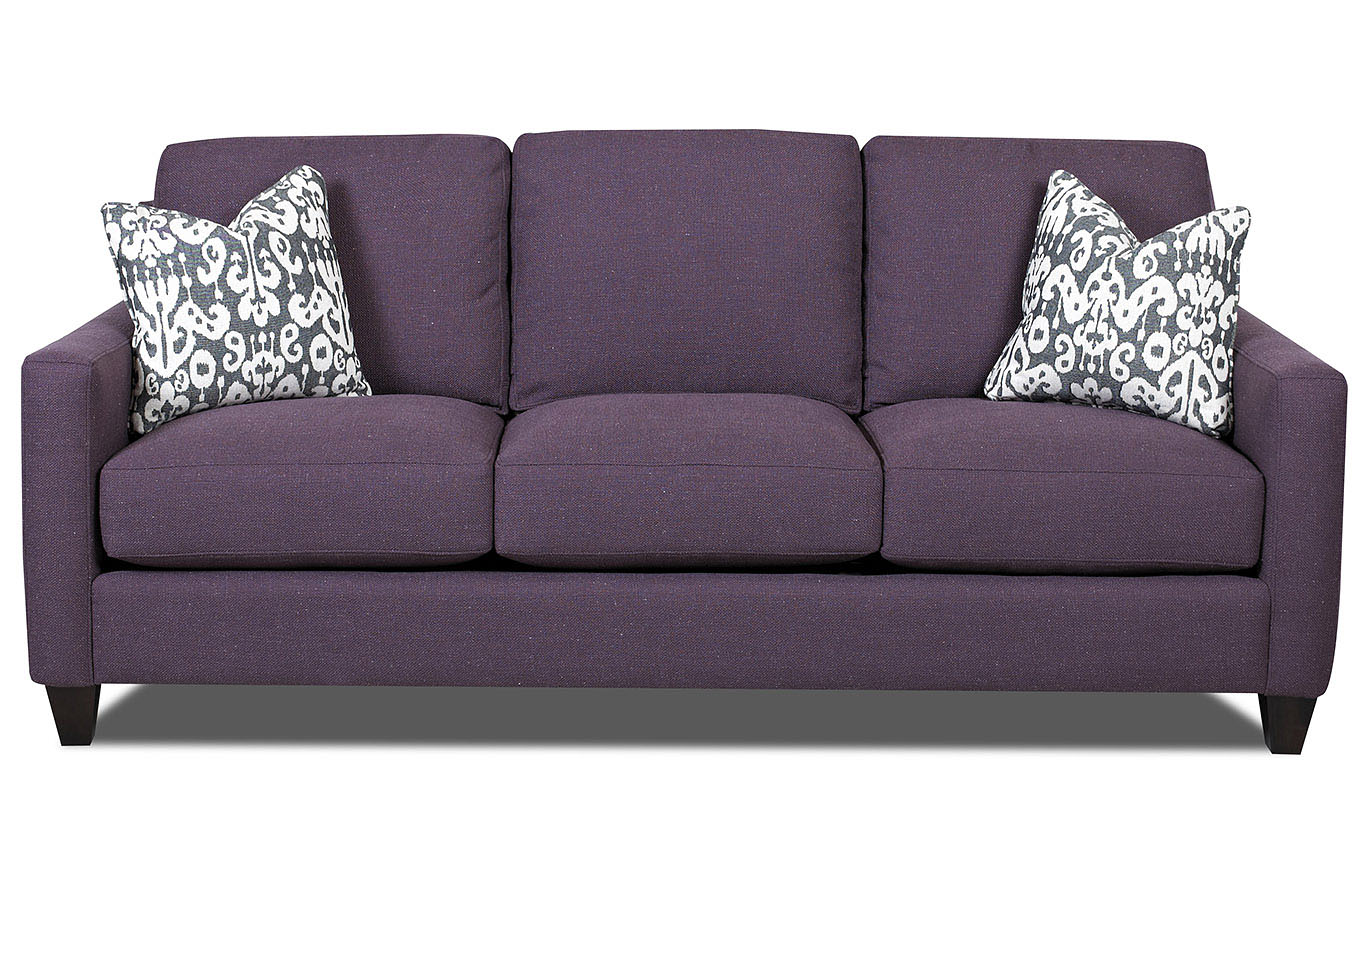 Fuller Plum Stationary Fabric Sofa,Klaussner Home Furnishings